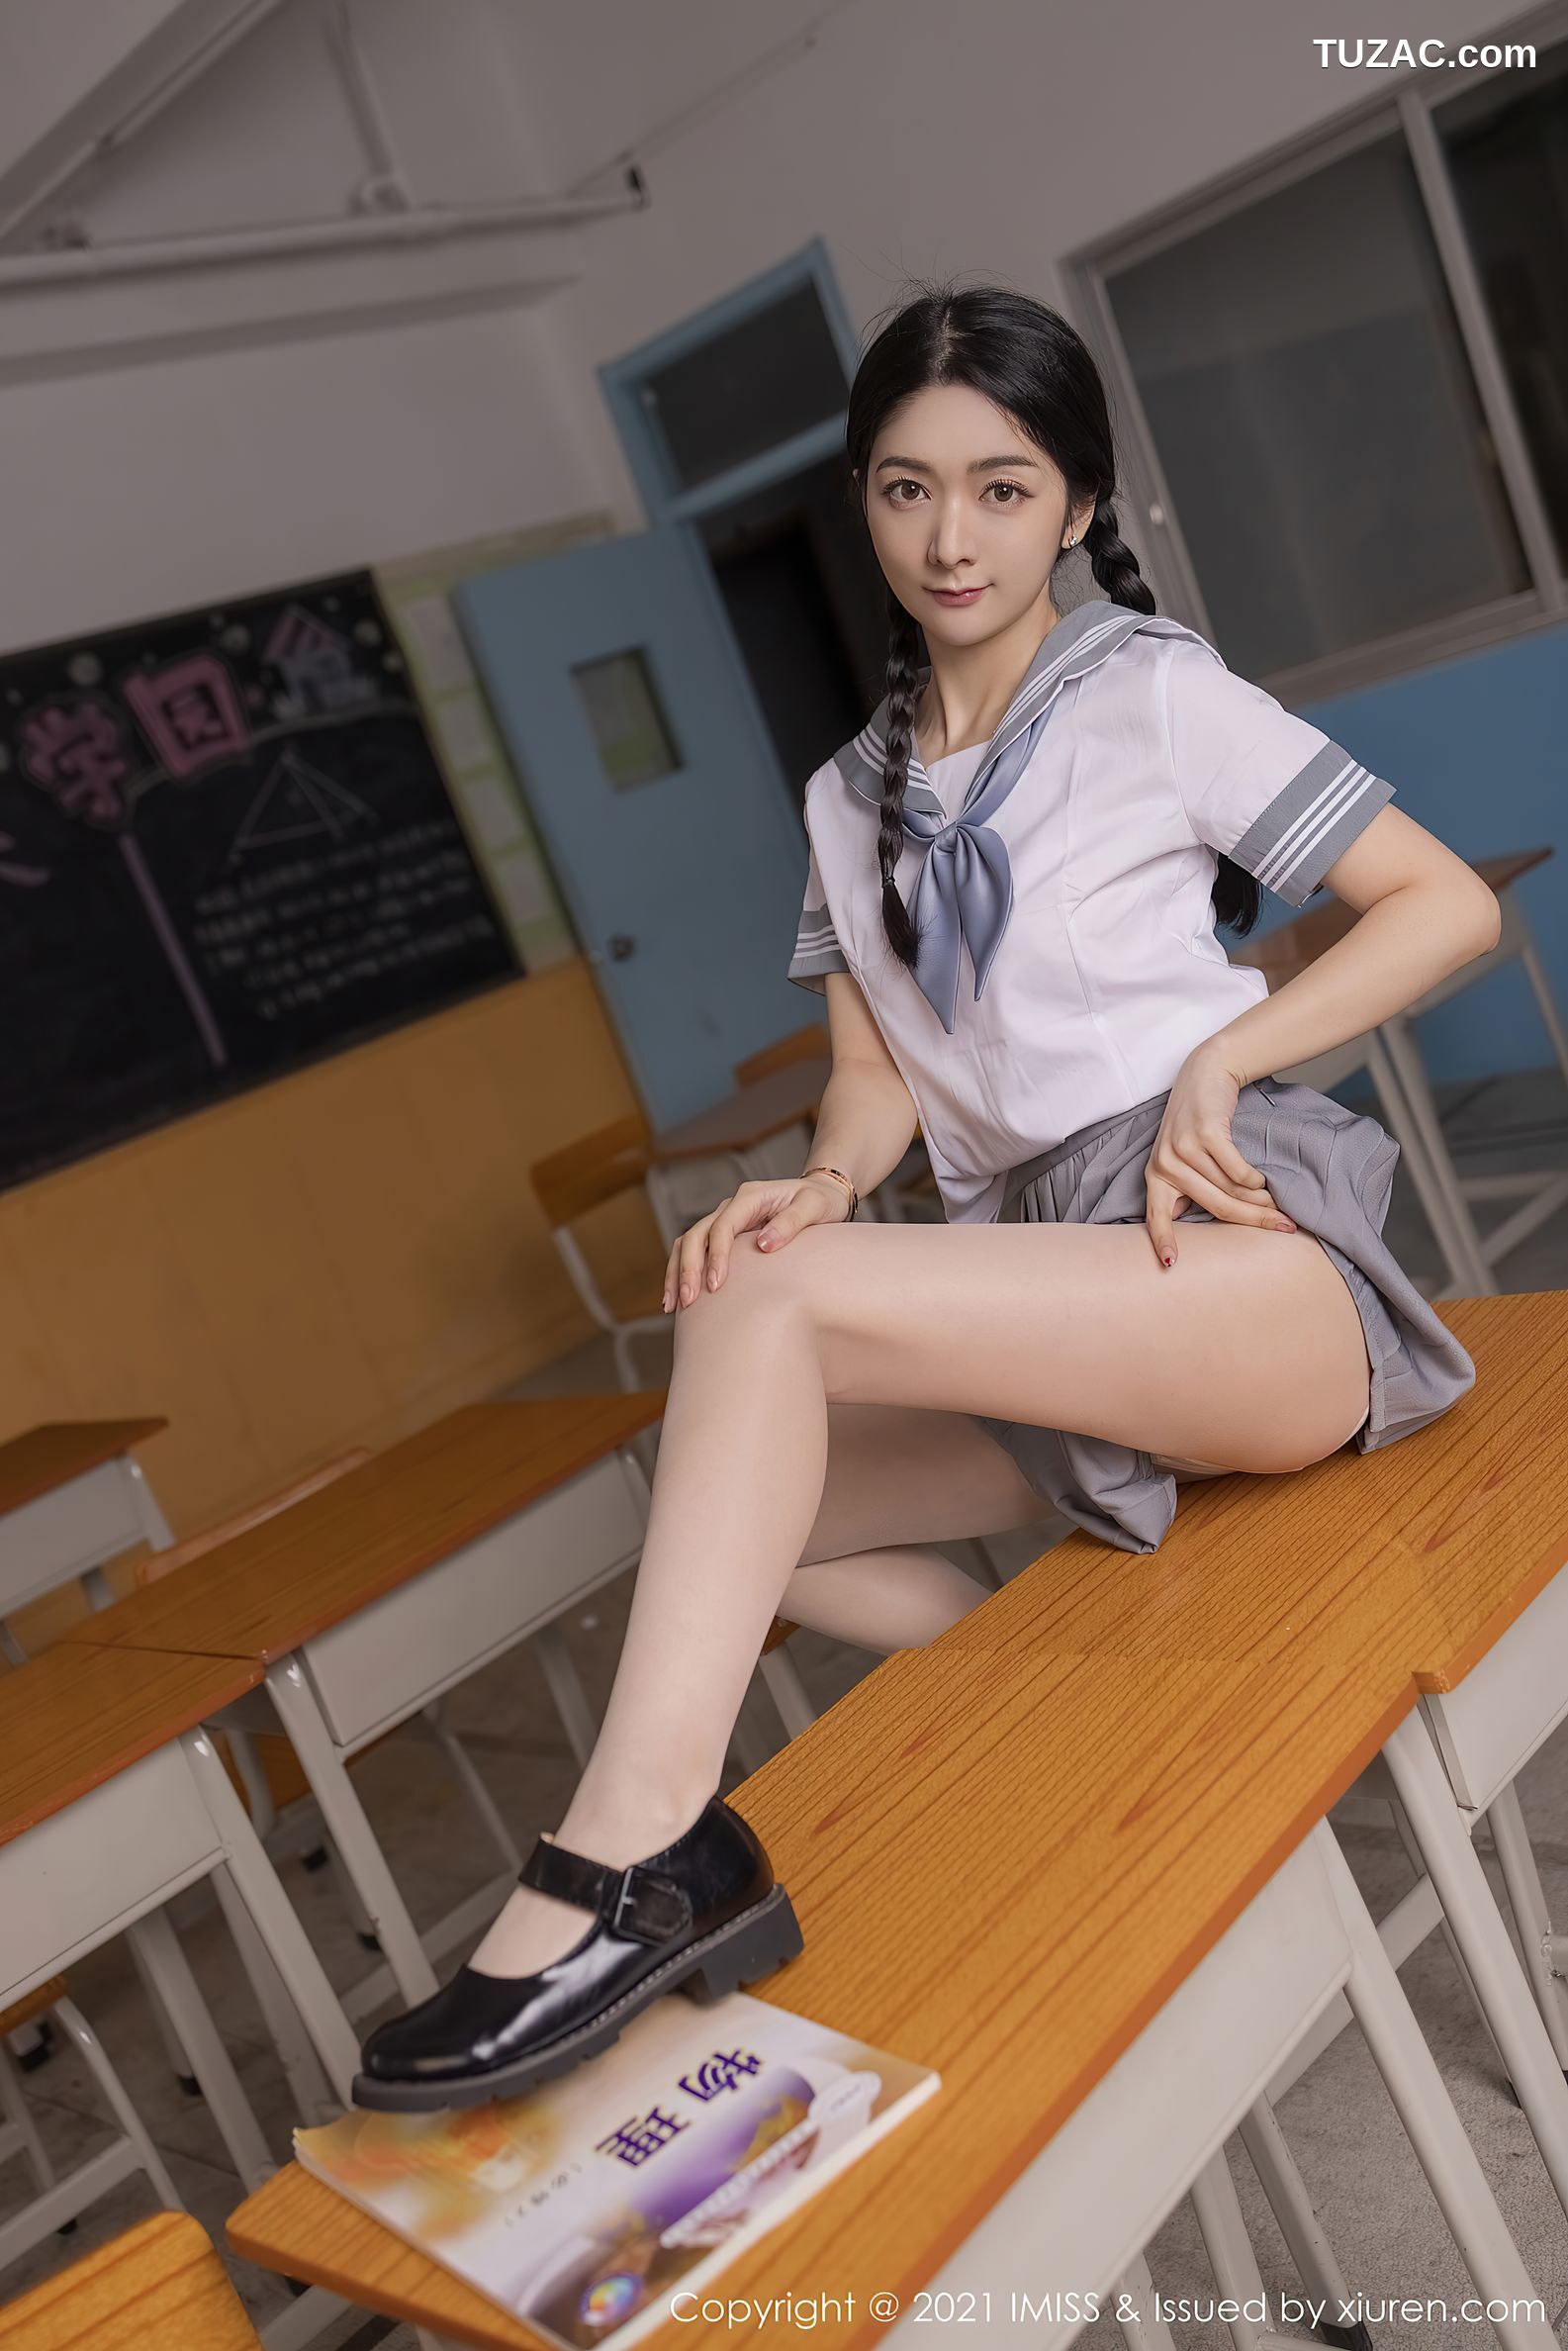 IMiss爱蜜社-583-小热巴-校服制服主题教室粉色内衣-2021.04.26